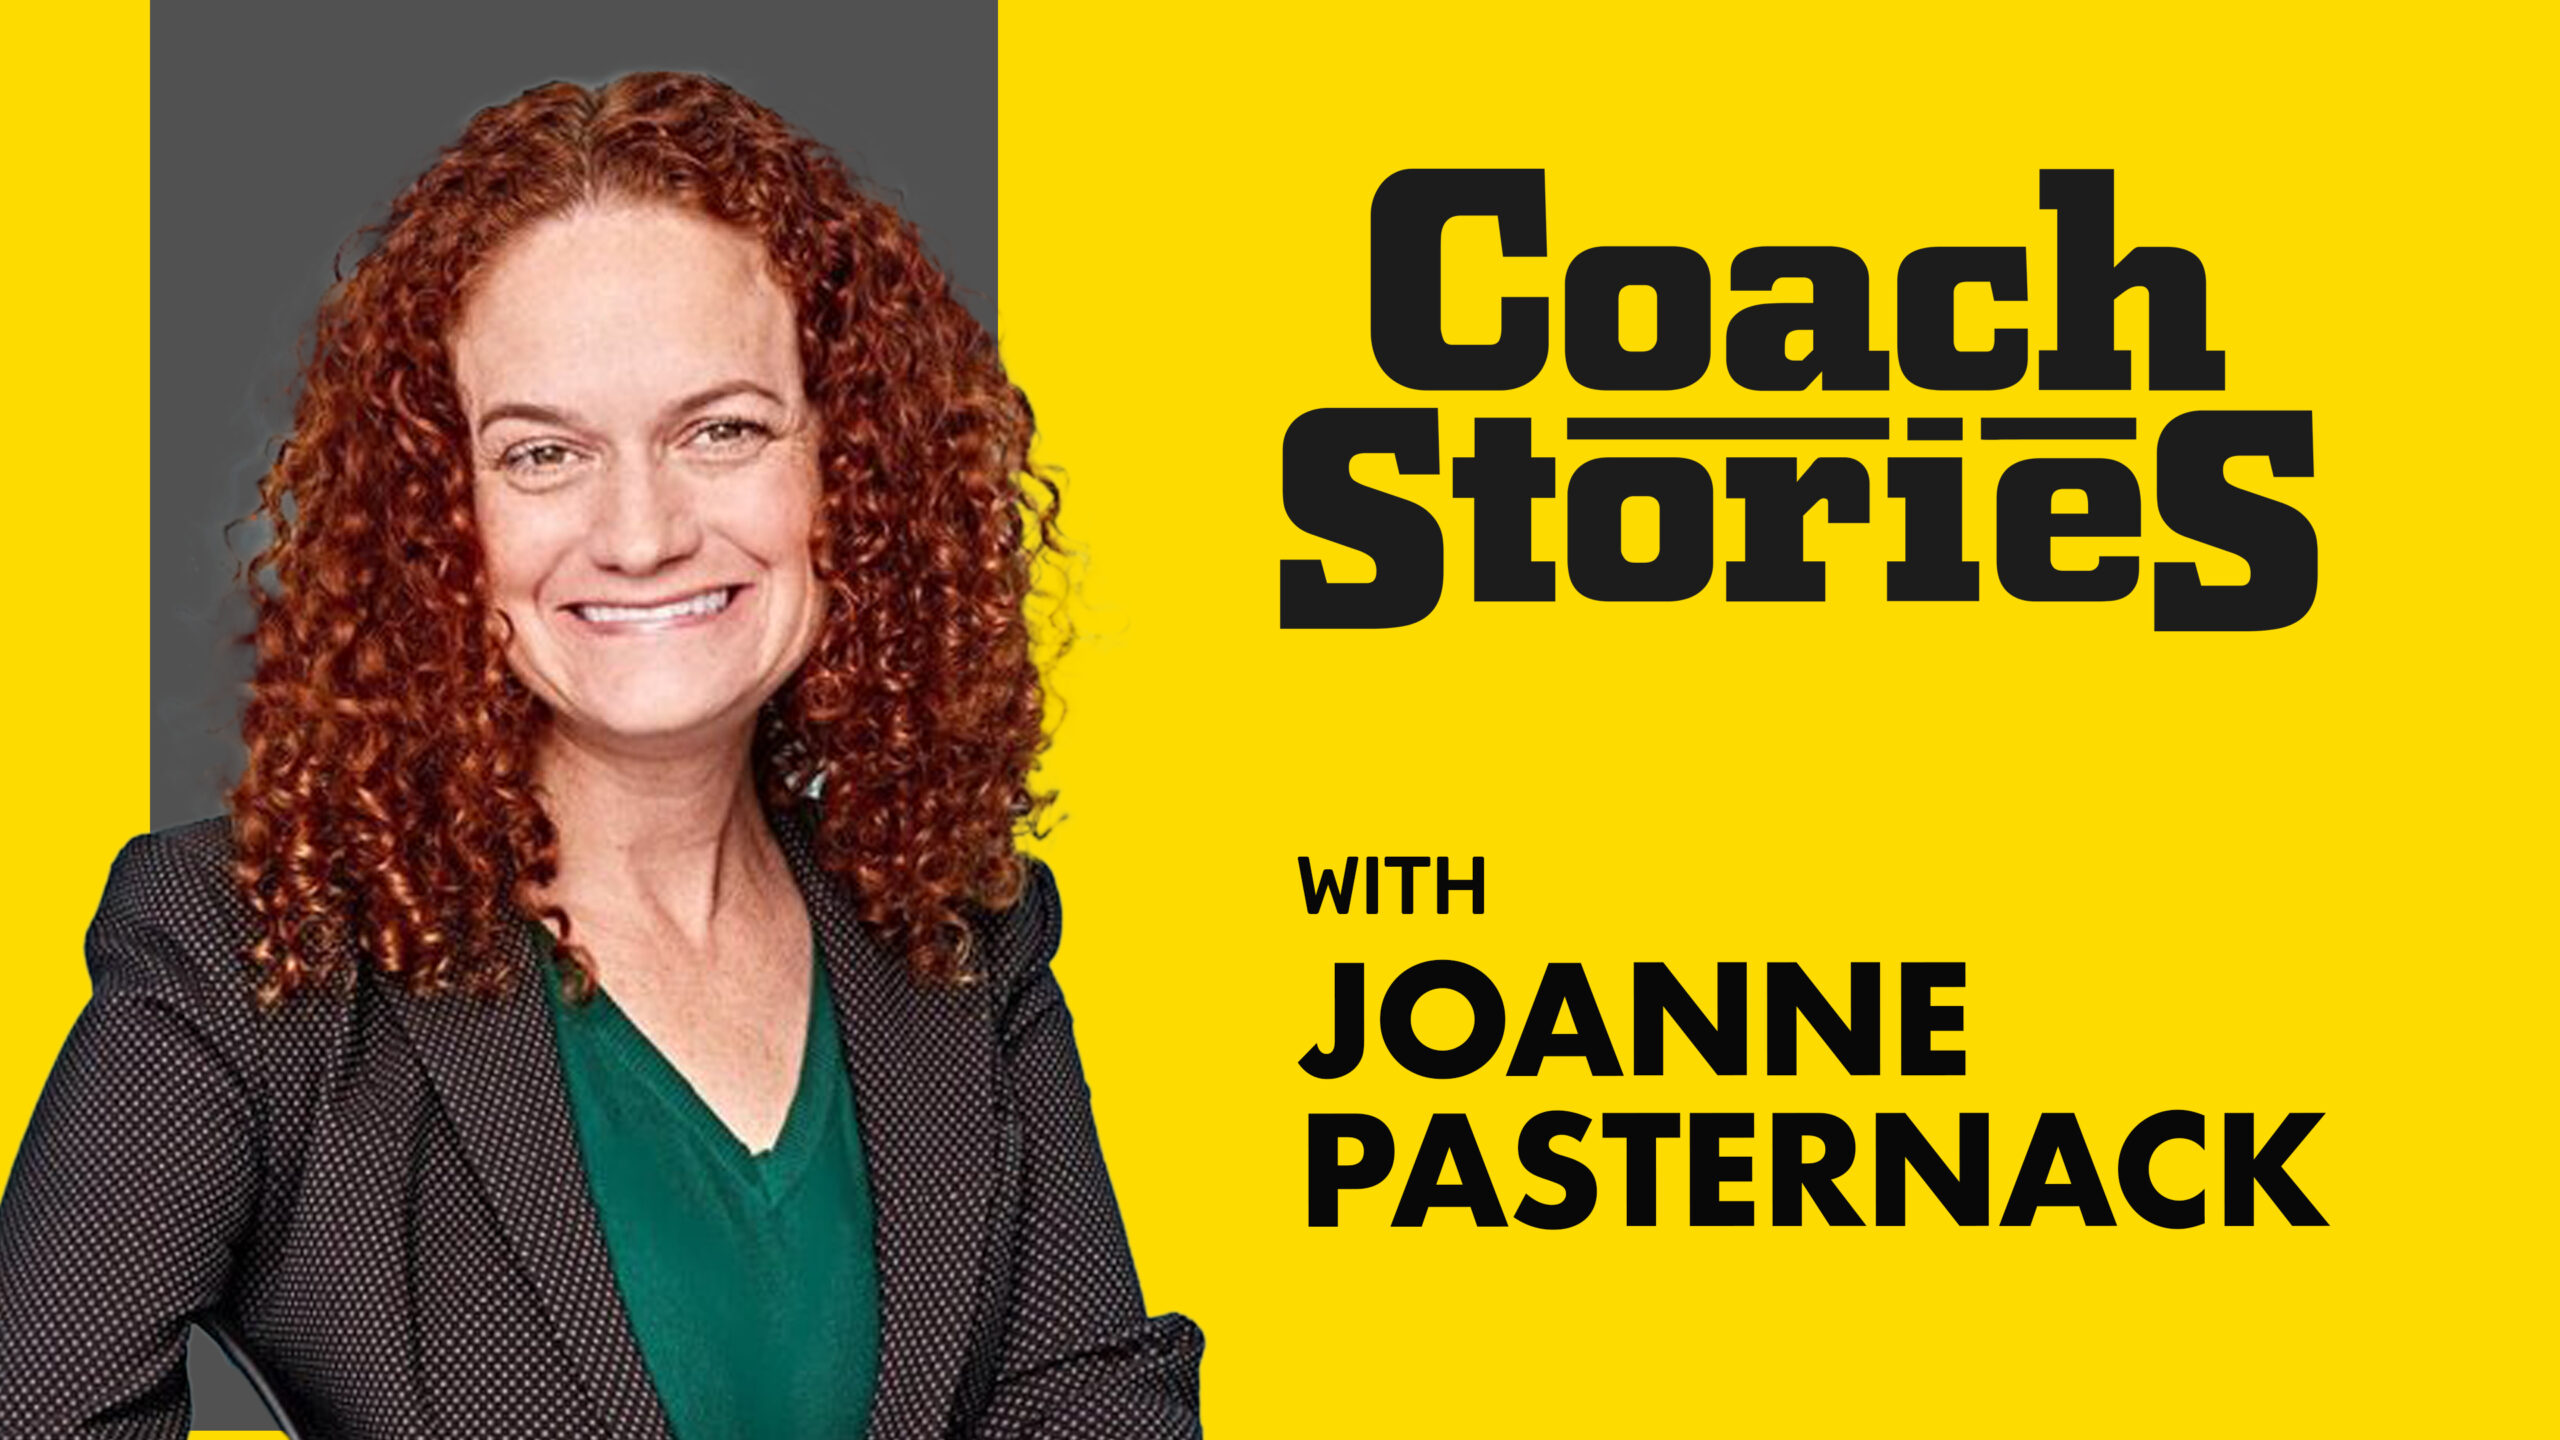 JOANNE PASTERNACK’S Coach Story